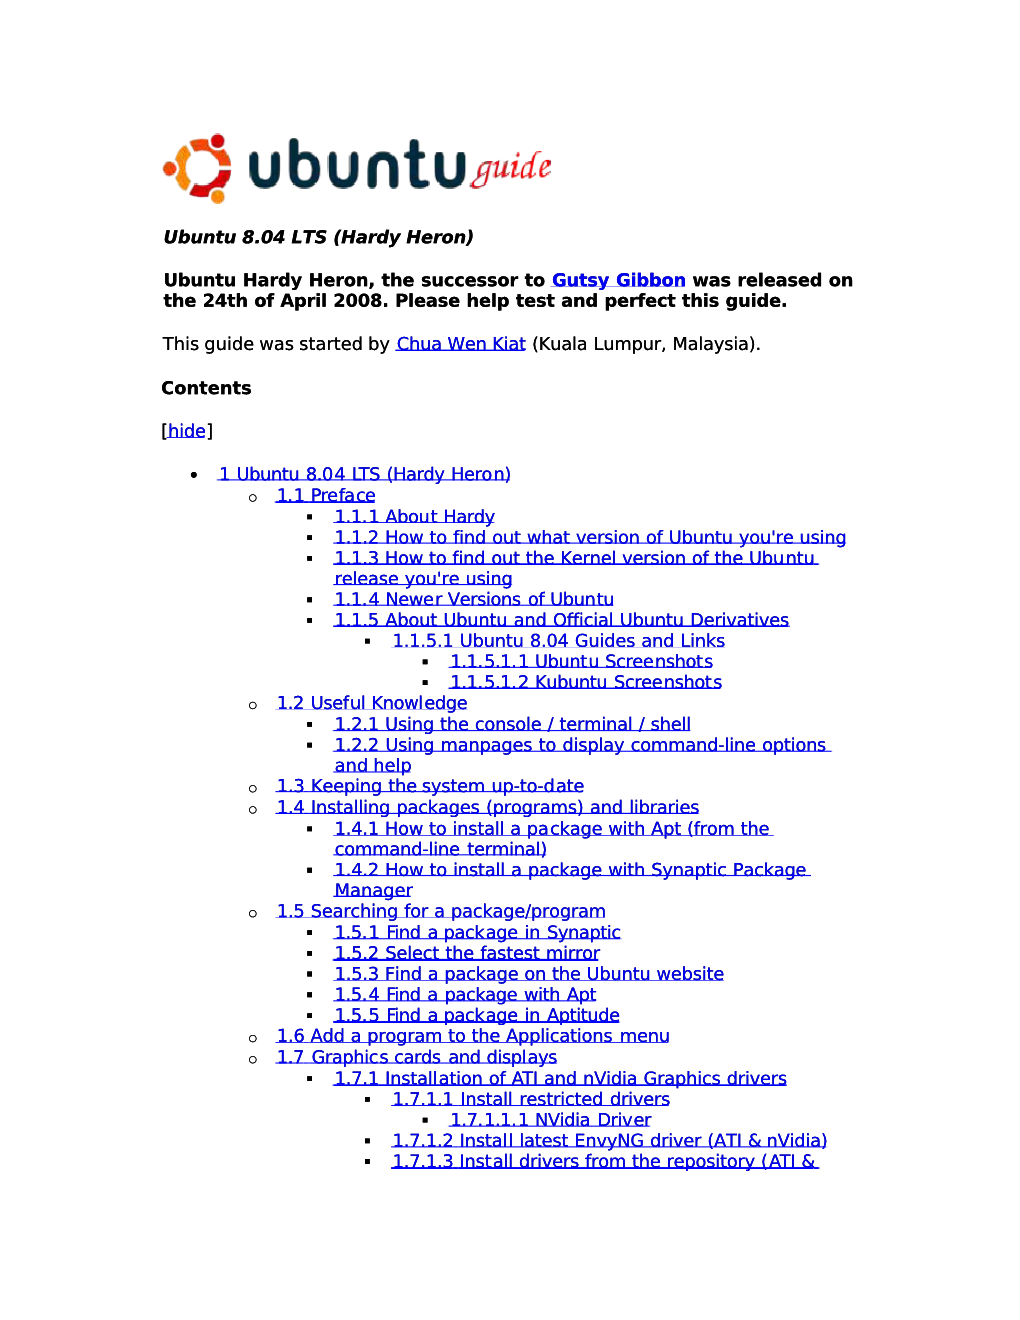 1 Ubuntu 8.04 LTS (Hardy Heron)